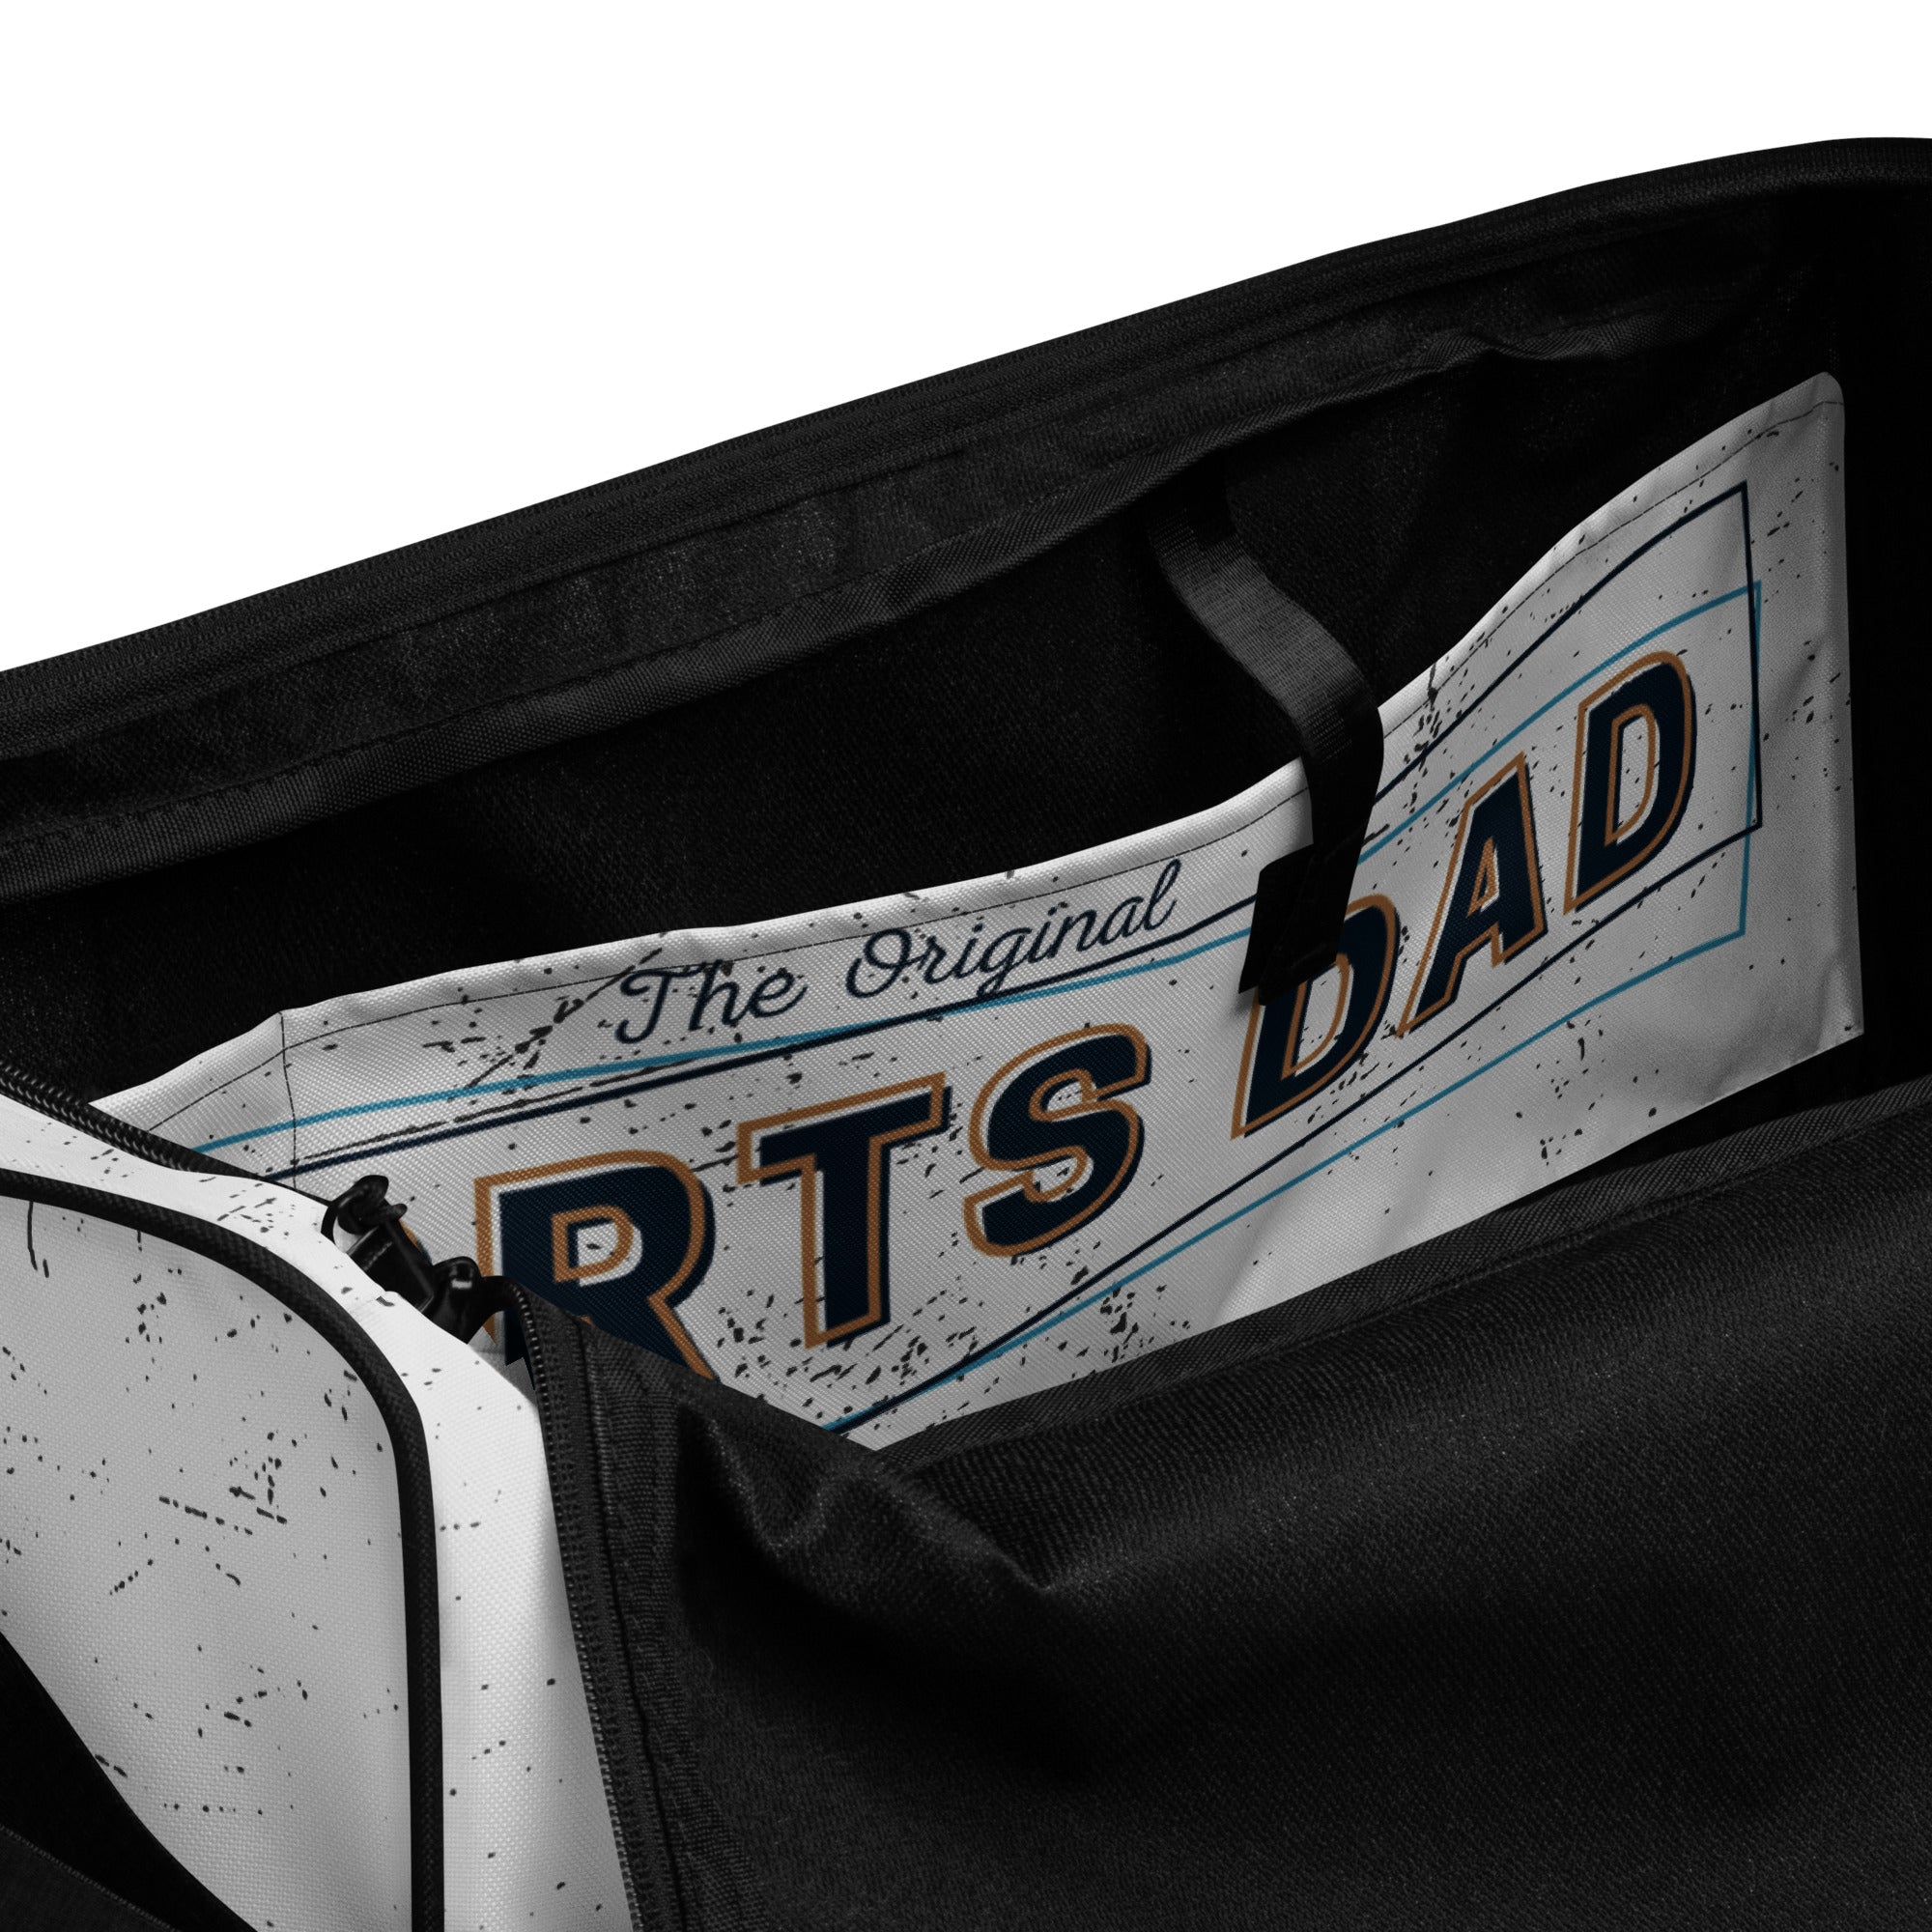 Sports Dad Ultimate Duffle Bag - Concrete Dad